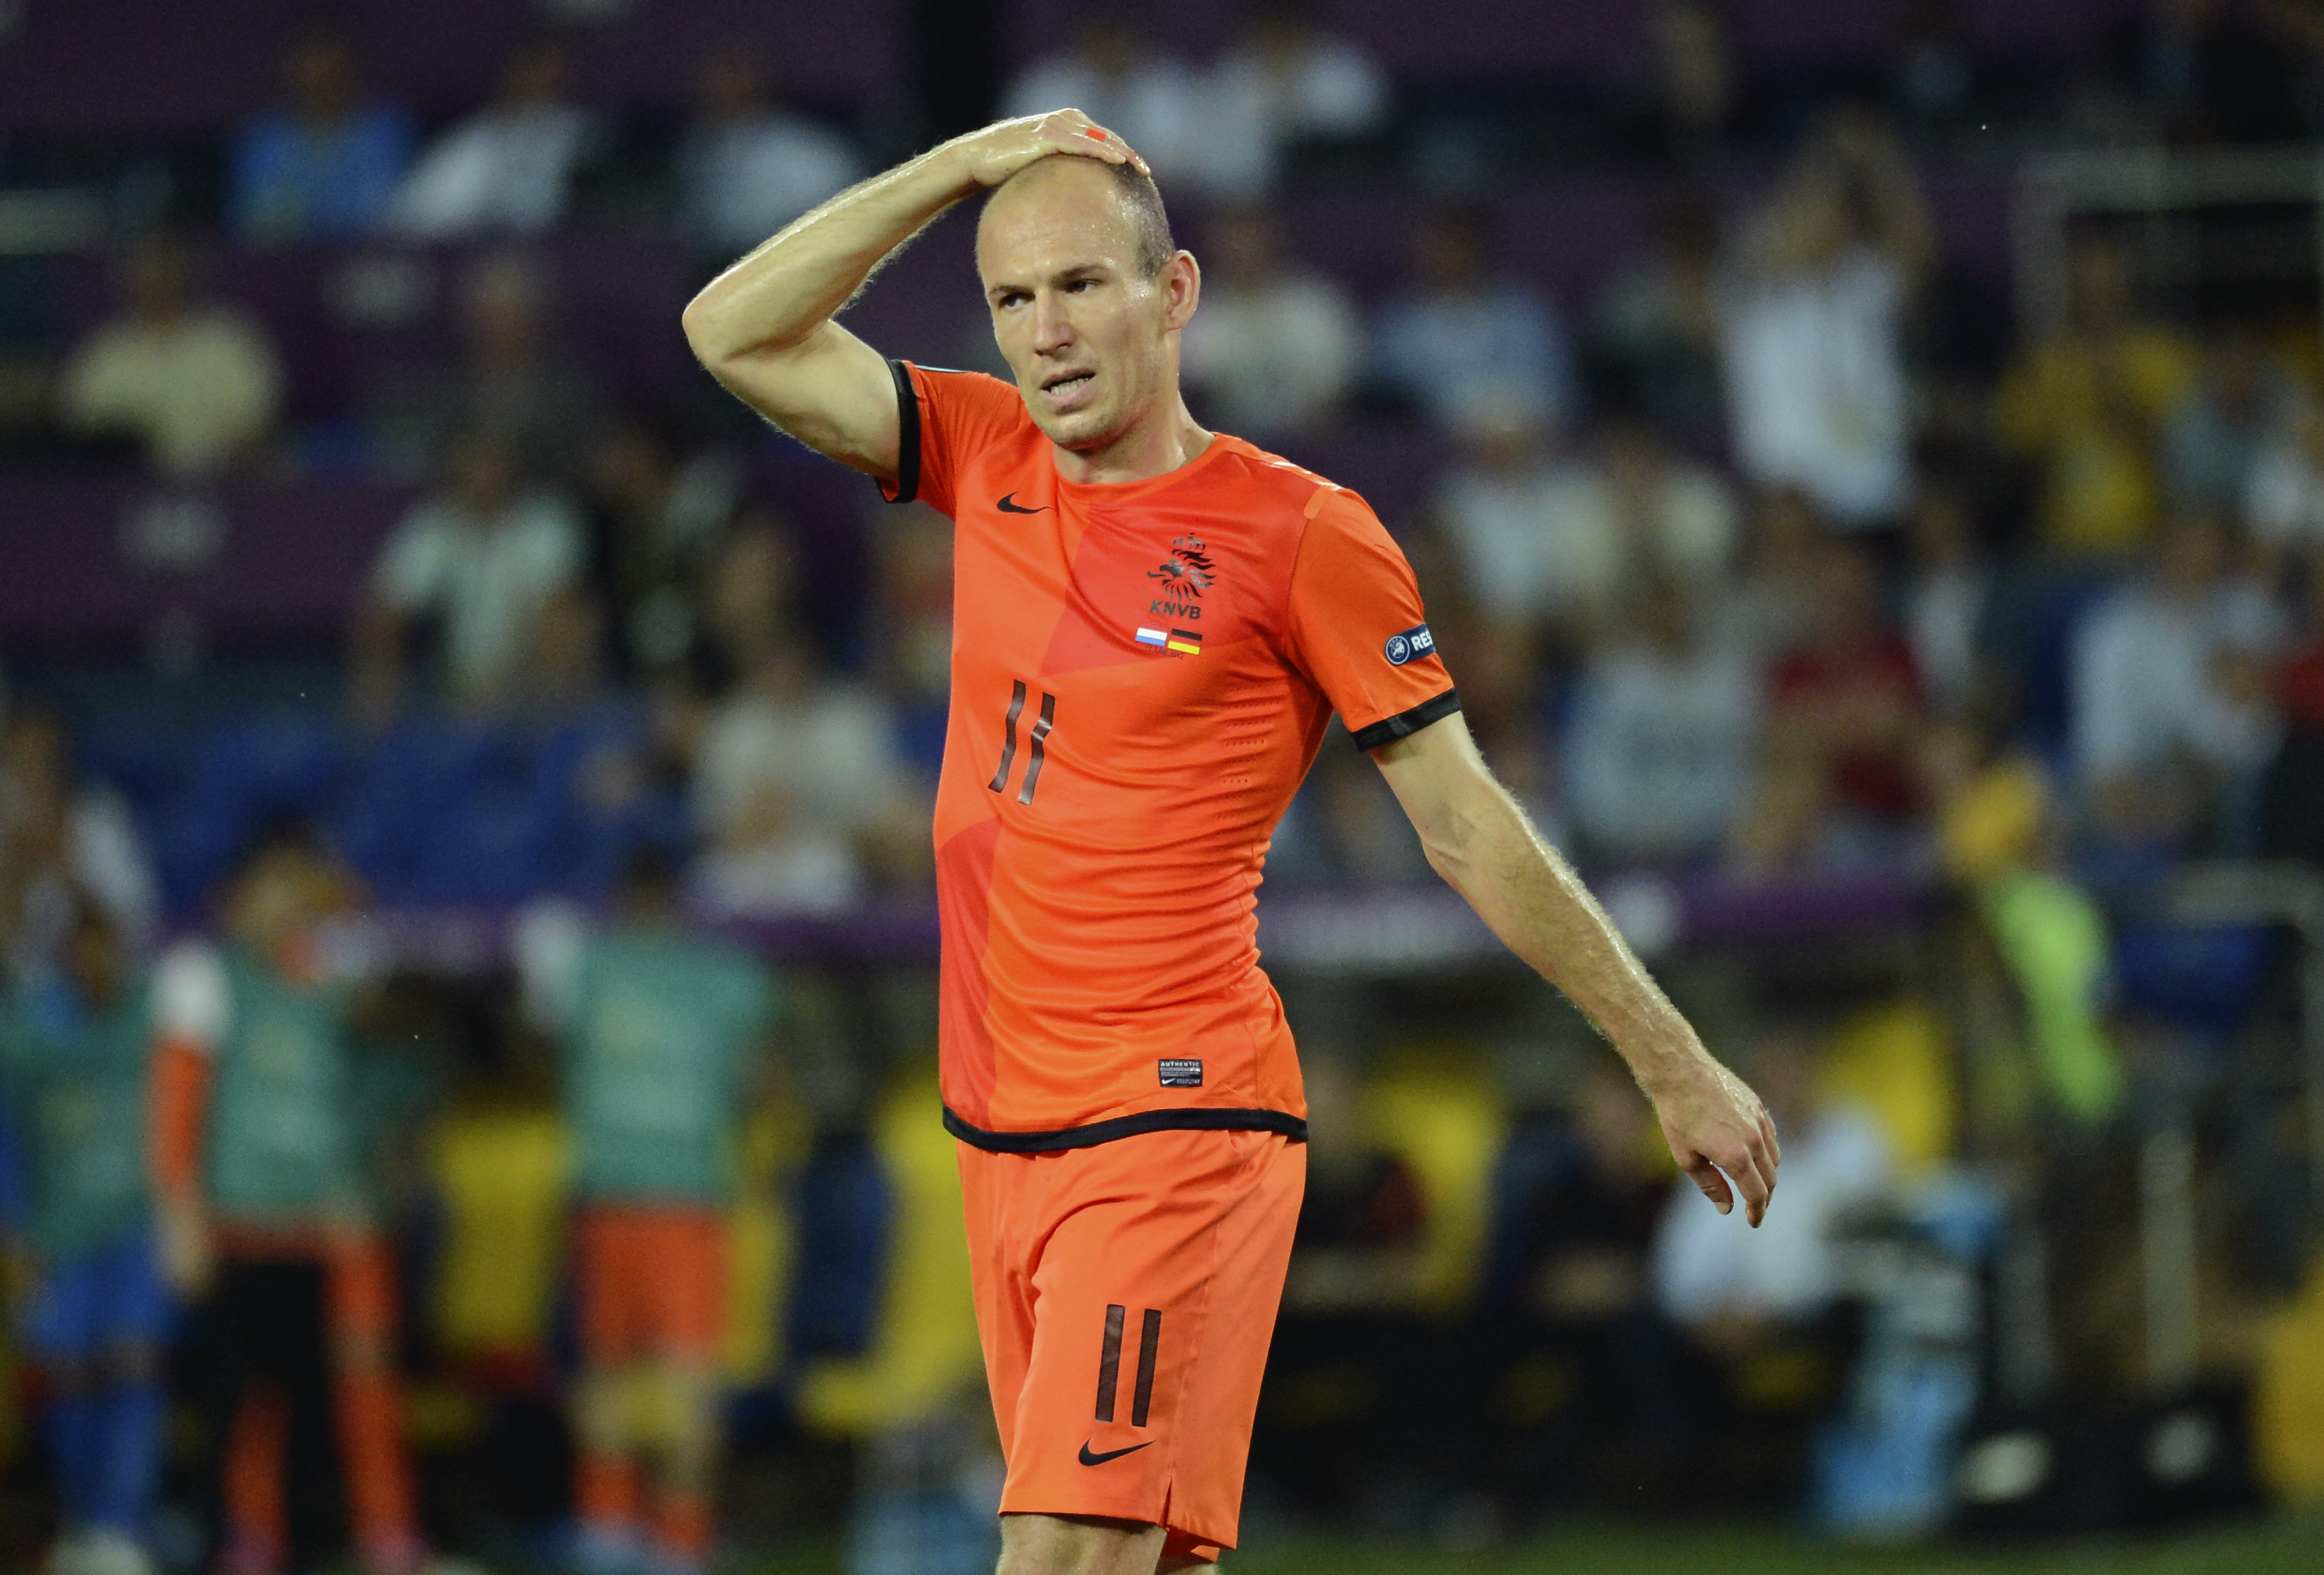 Fotbolls-EM, Arjen Robben, Holland, EM, Fotboll